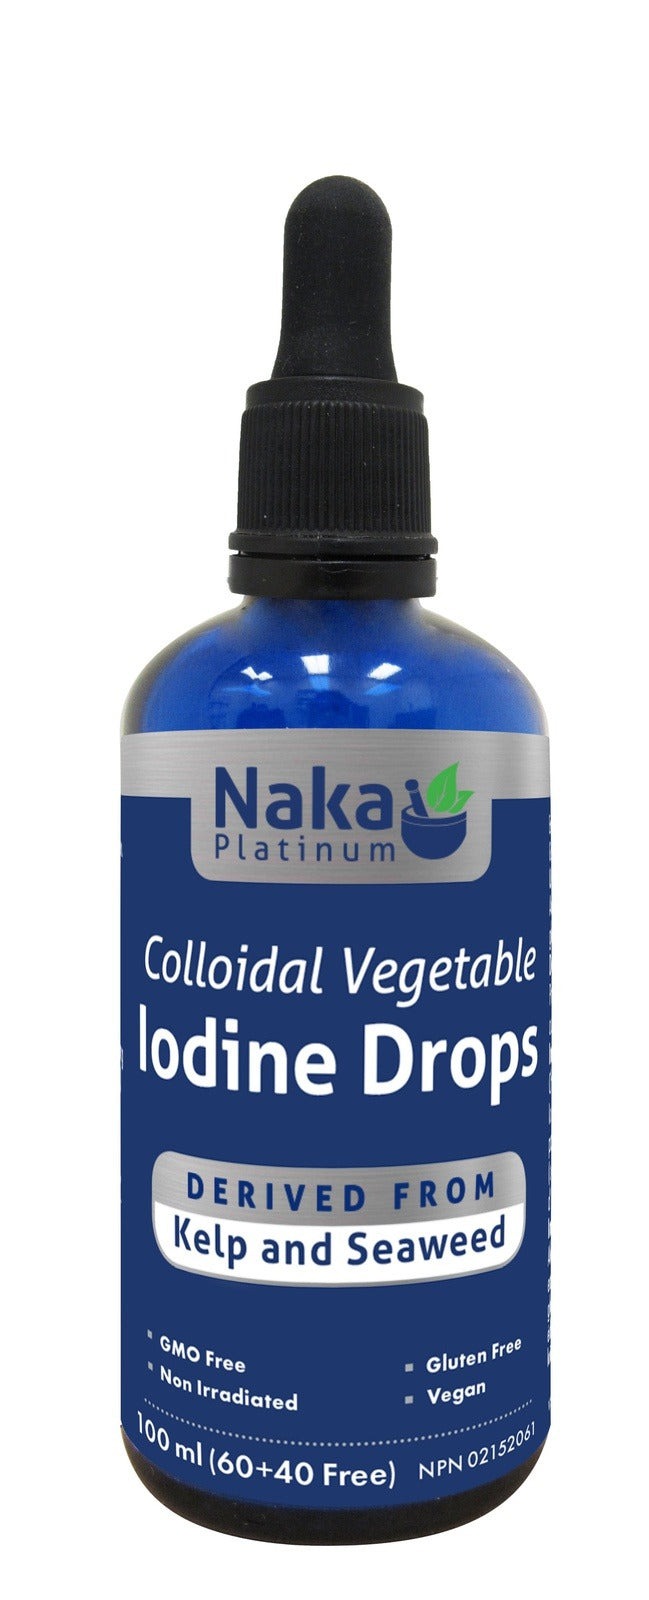 Naka Platinum Colloidal Vegetable Iodine Drops 100 mL Image 1